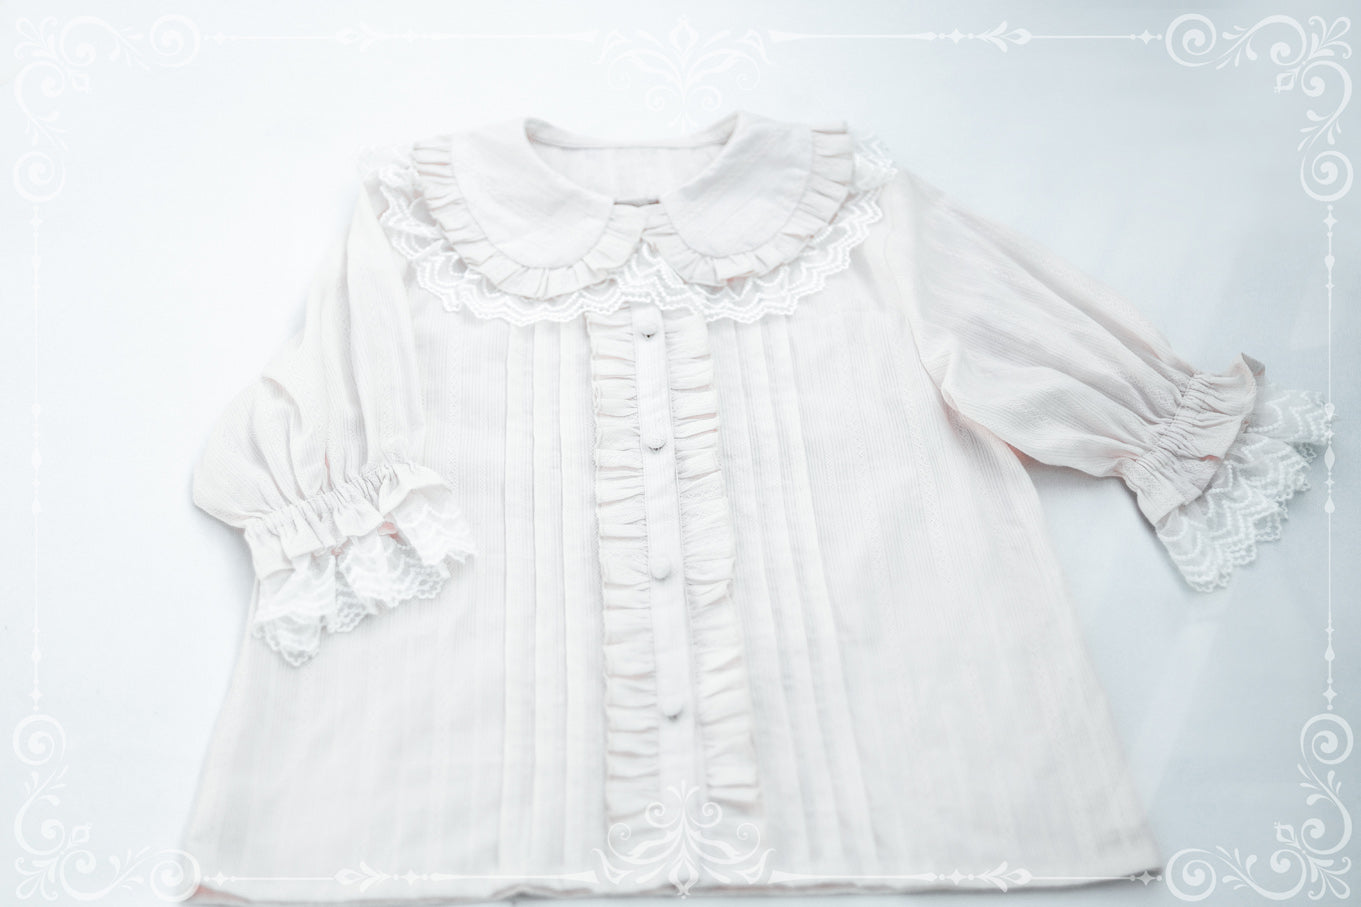 MIST~Sweet Lolita Golilla Short Sleeve Shirt S milk white 